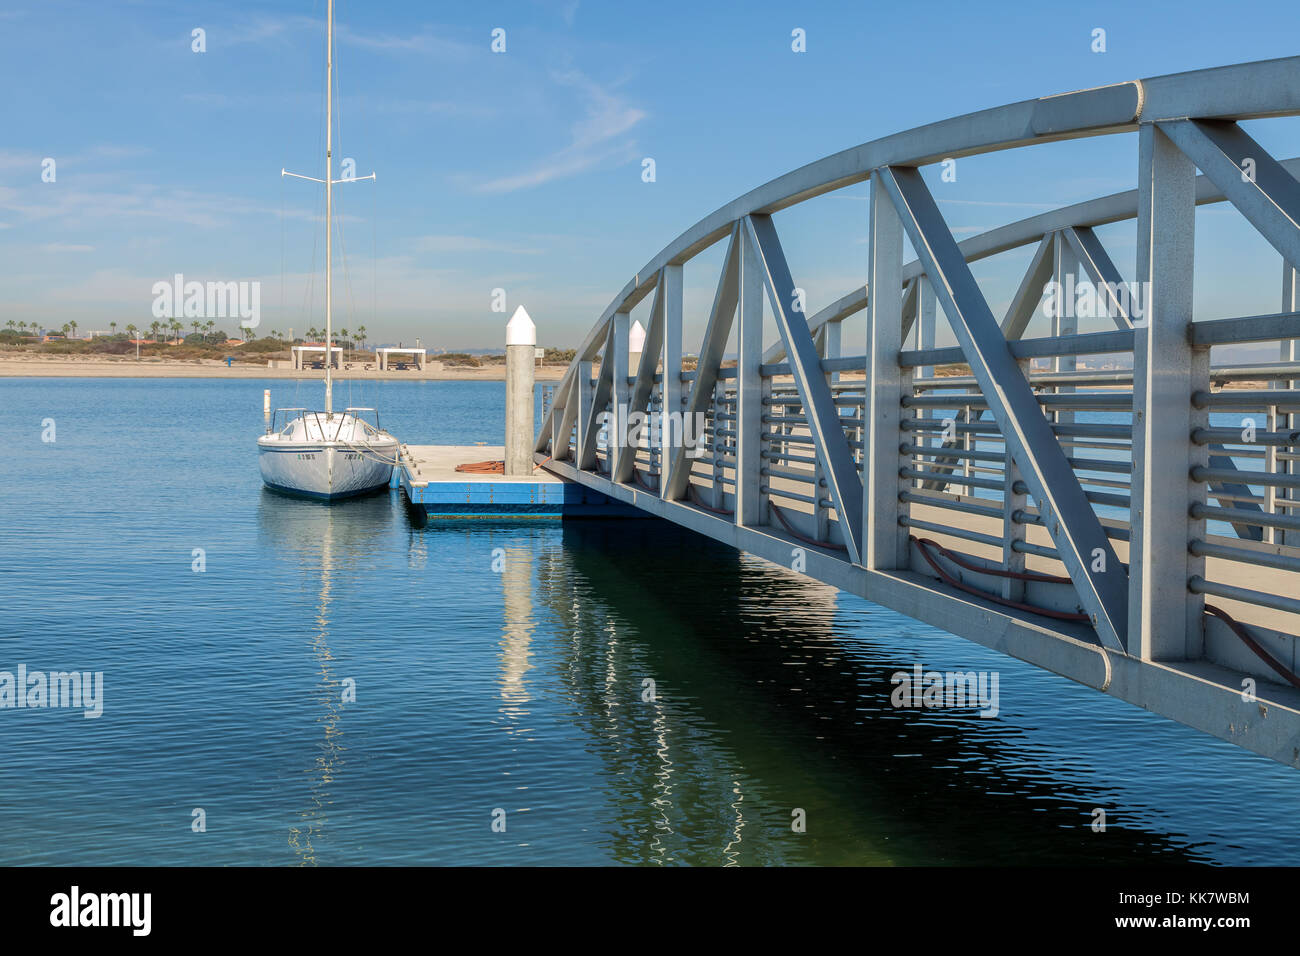 Small bridge connecting to a dock with docked boat, Coronado Bay, California, USA. Stock Photo